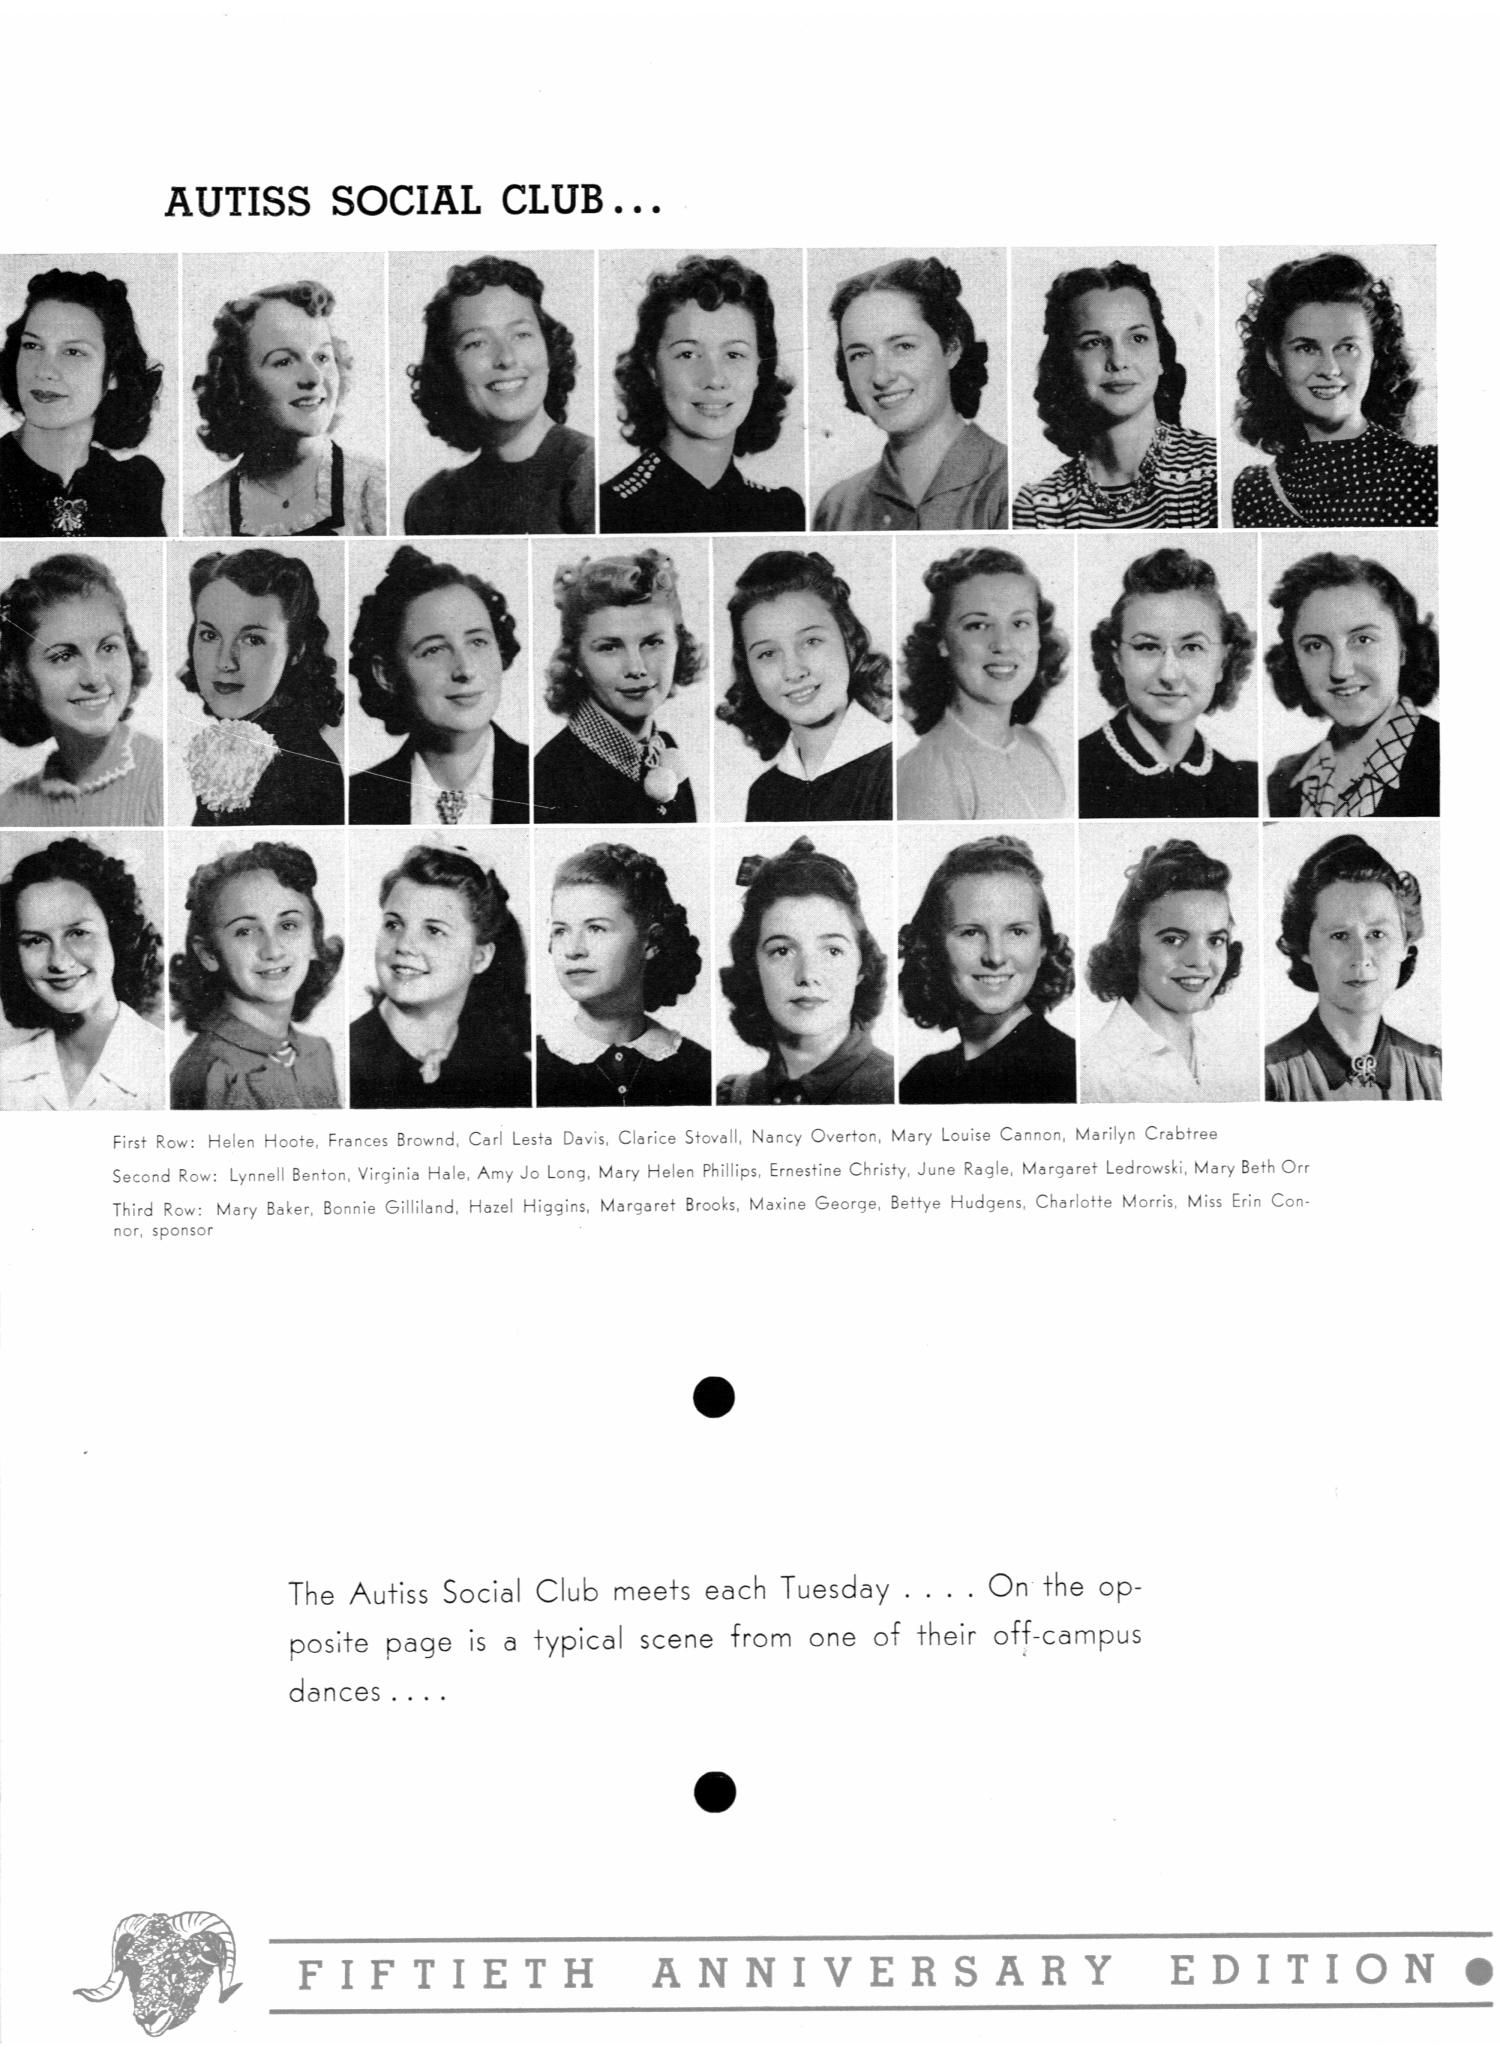 TXWECO, Yearbook of Texas Wesleyan College, 1941
                                                
                                                    68
                                                